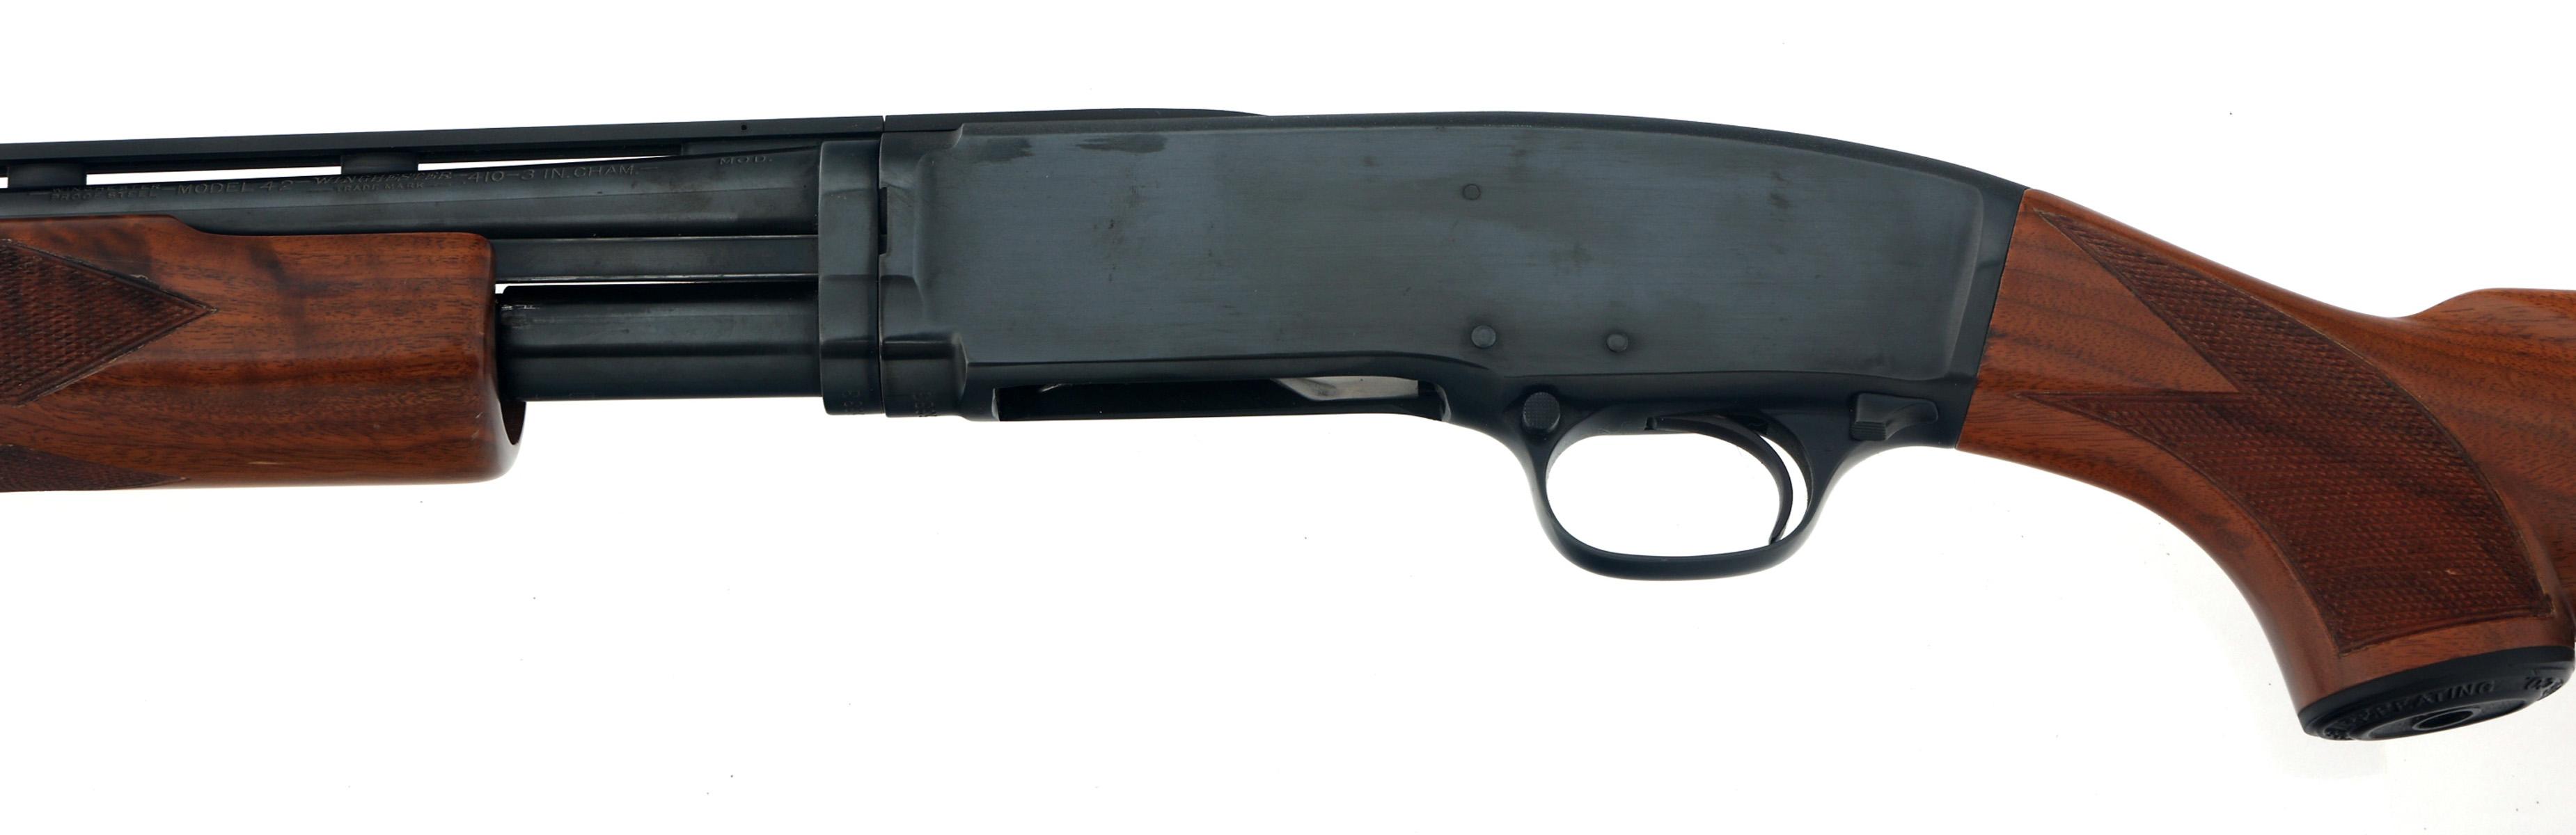 1941 WINCHESTER MODEL 42 .410 GAUGE SHOTGUN